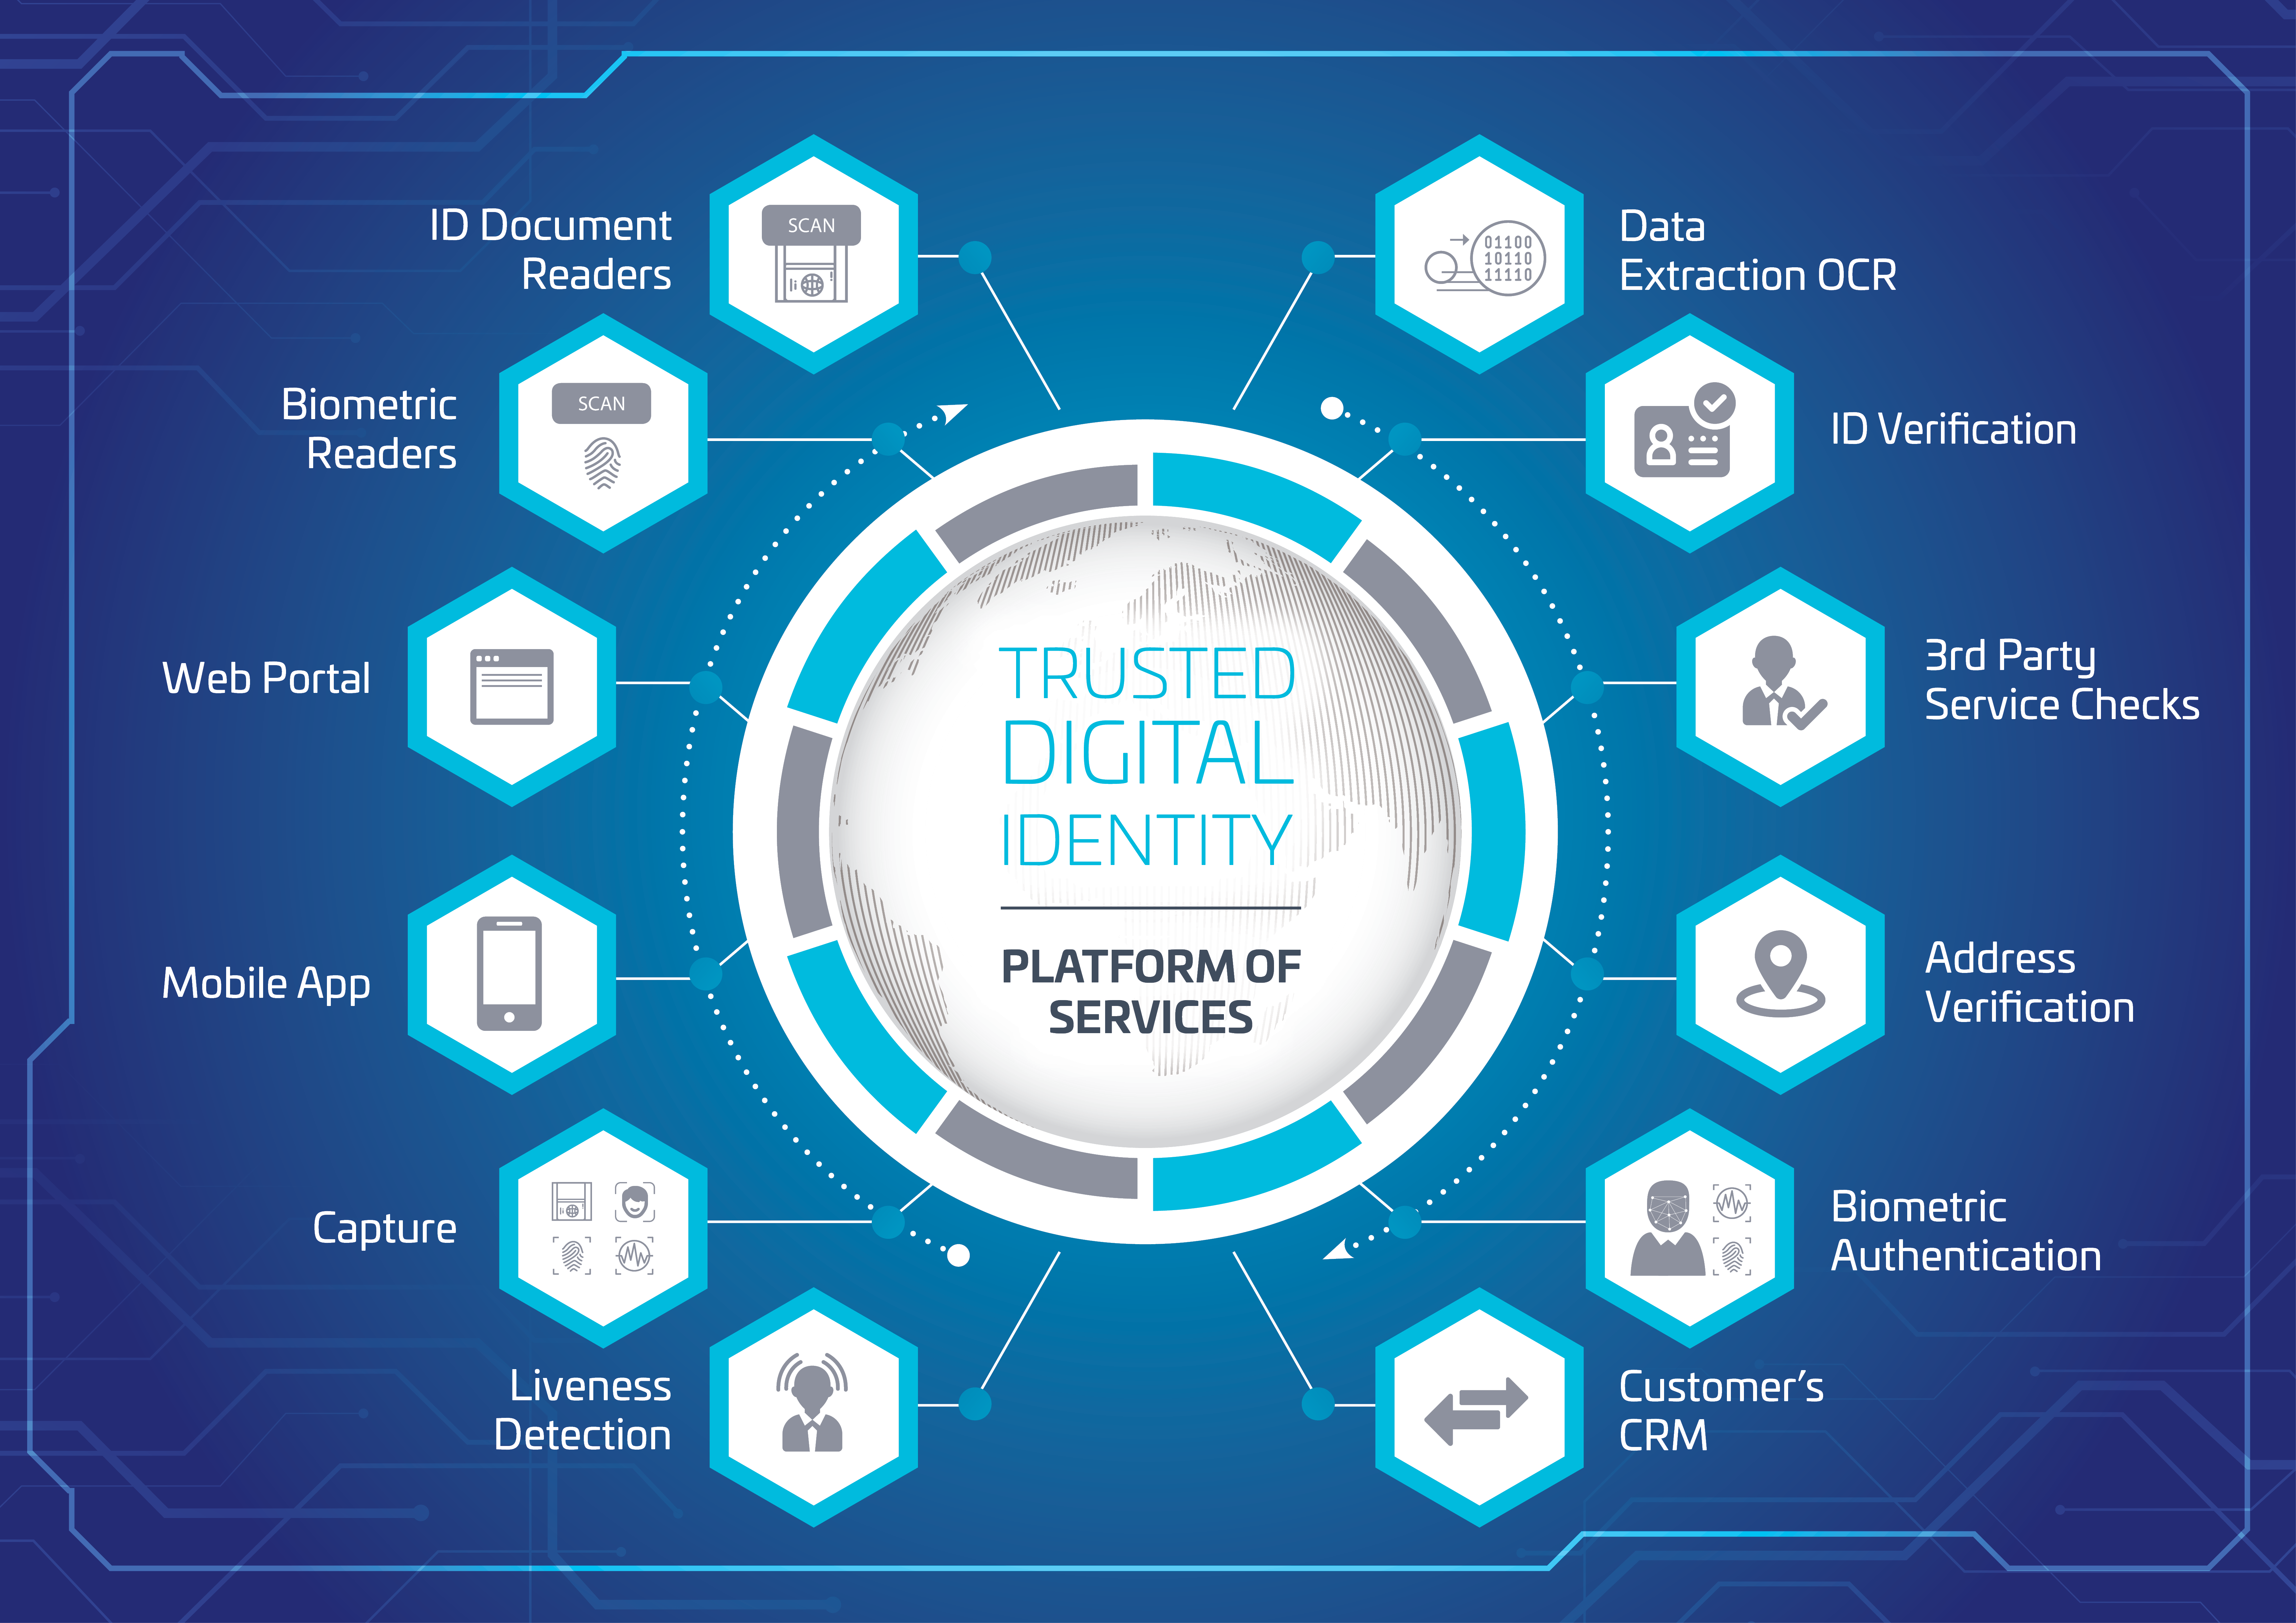 Representation of Trusted Digital ID services platform